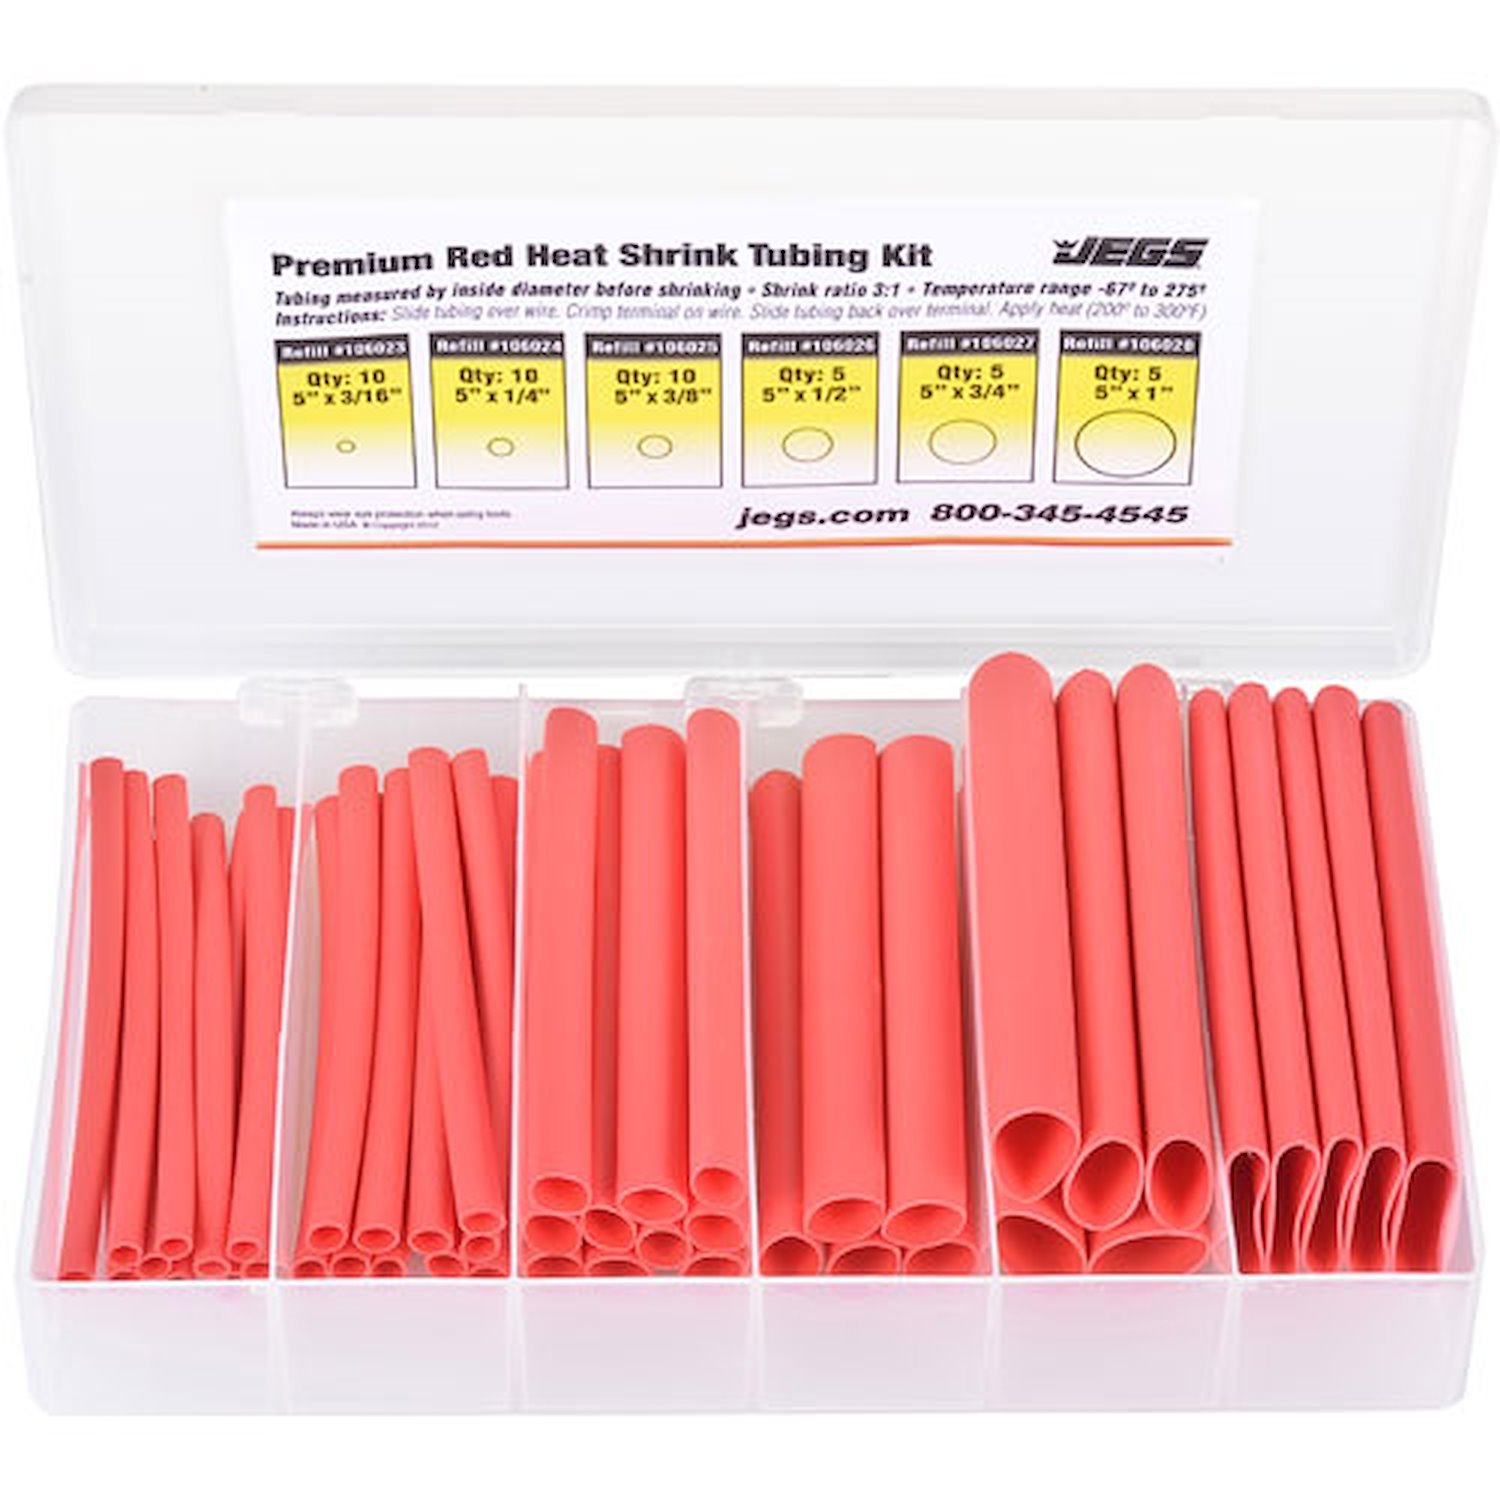 Red Premium Heat Shrink Tubing Kit with Storage